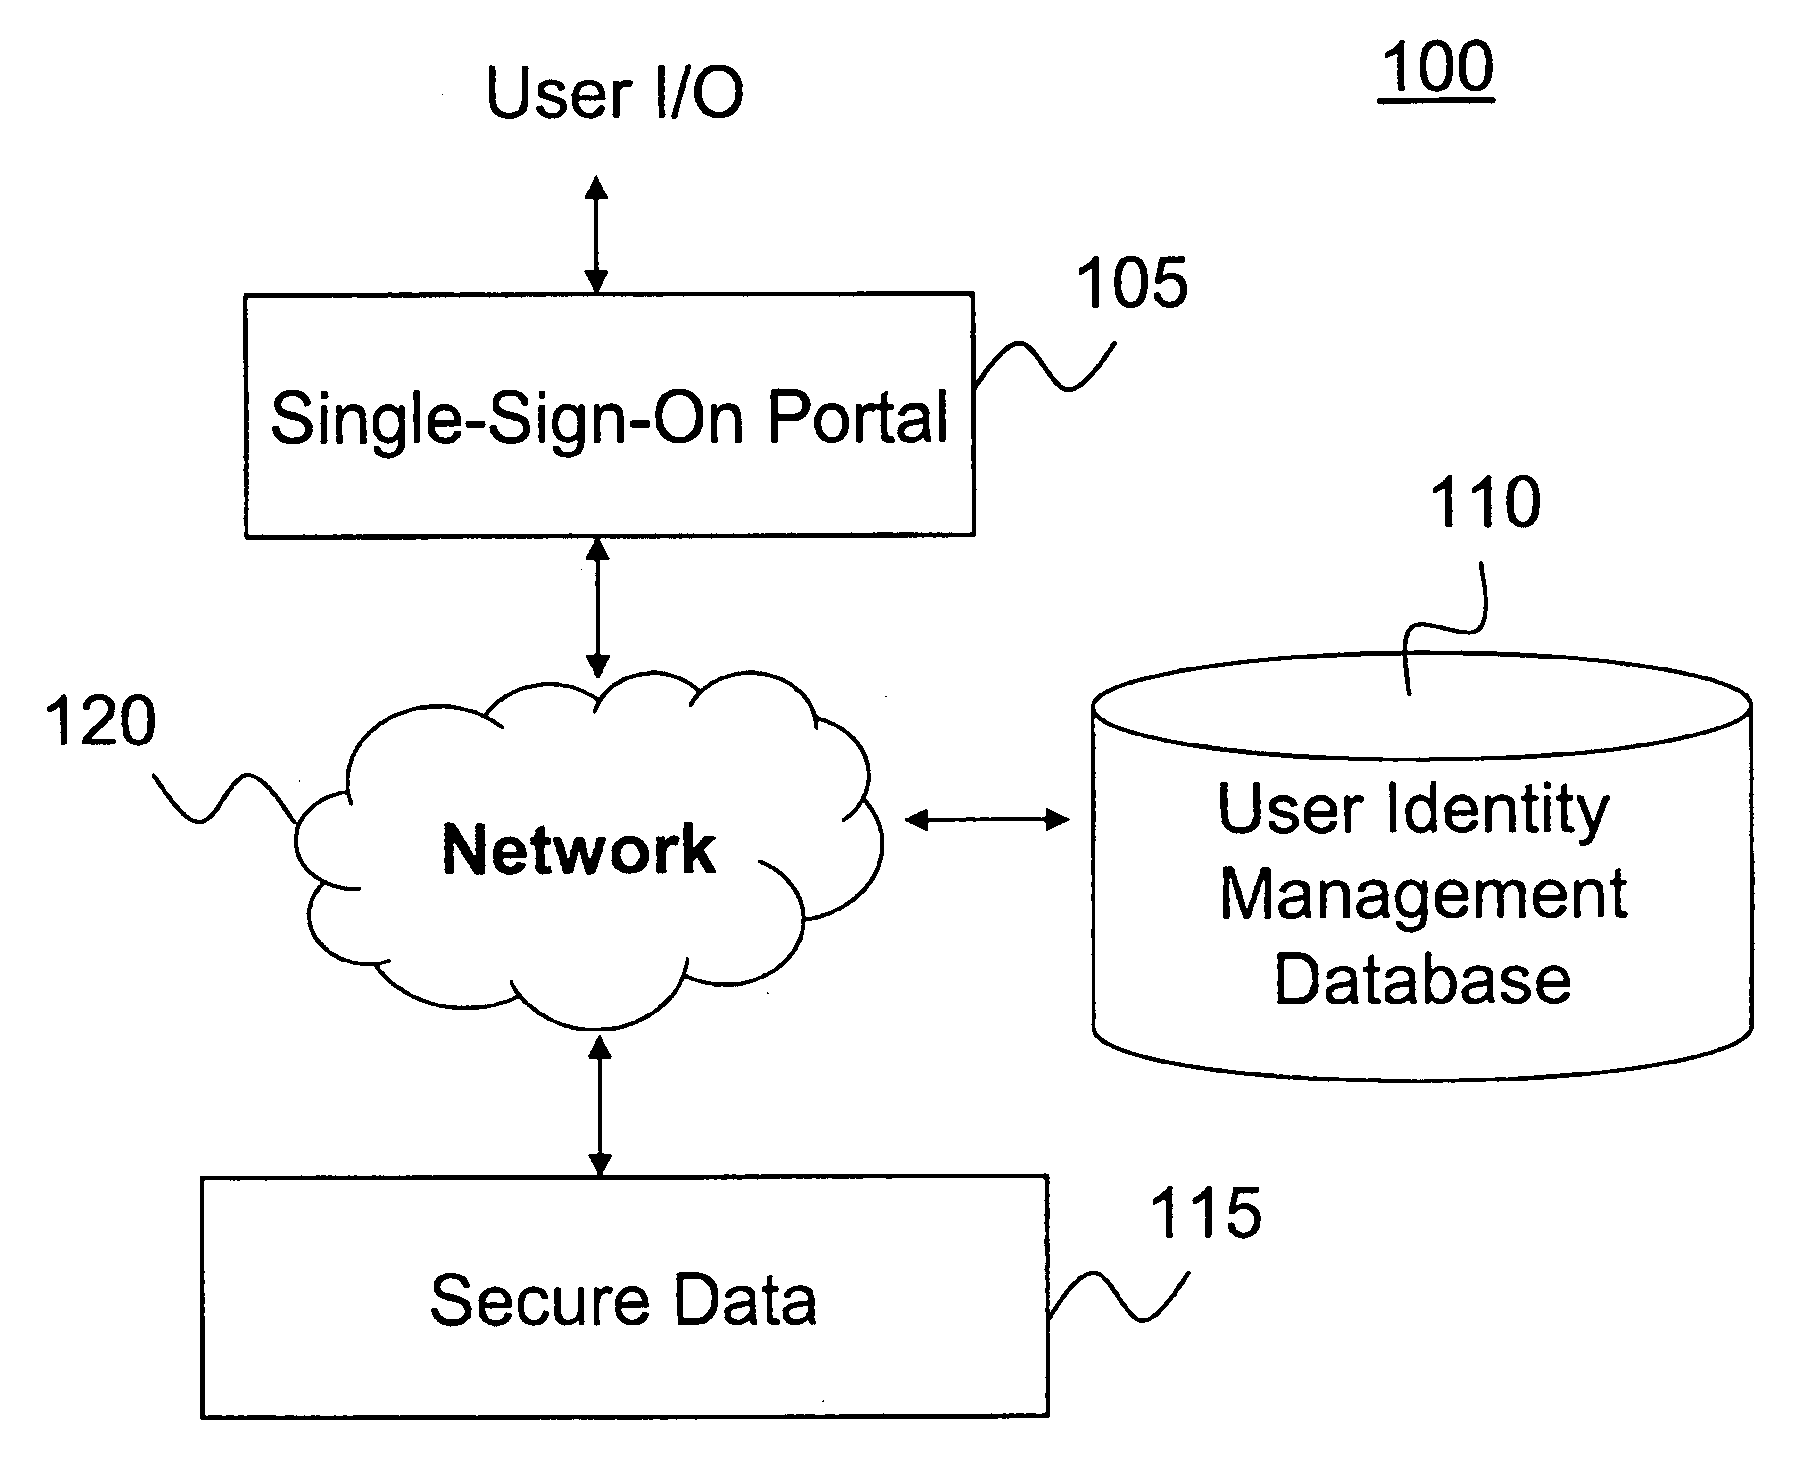 Secure single-sign-on portal system